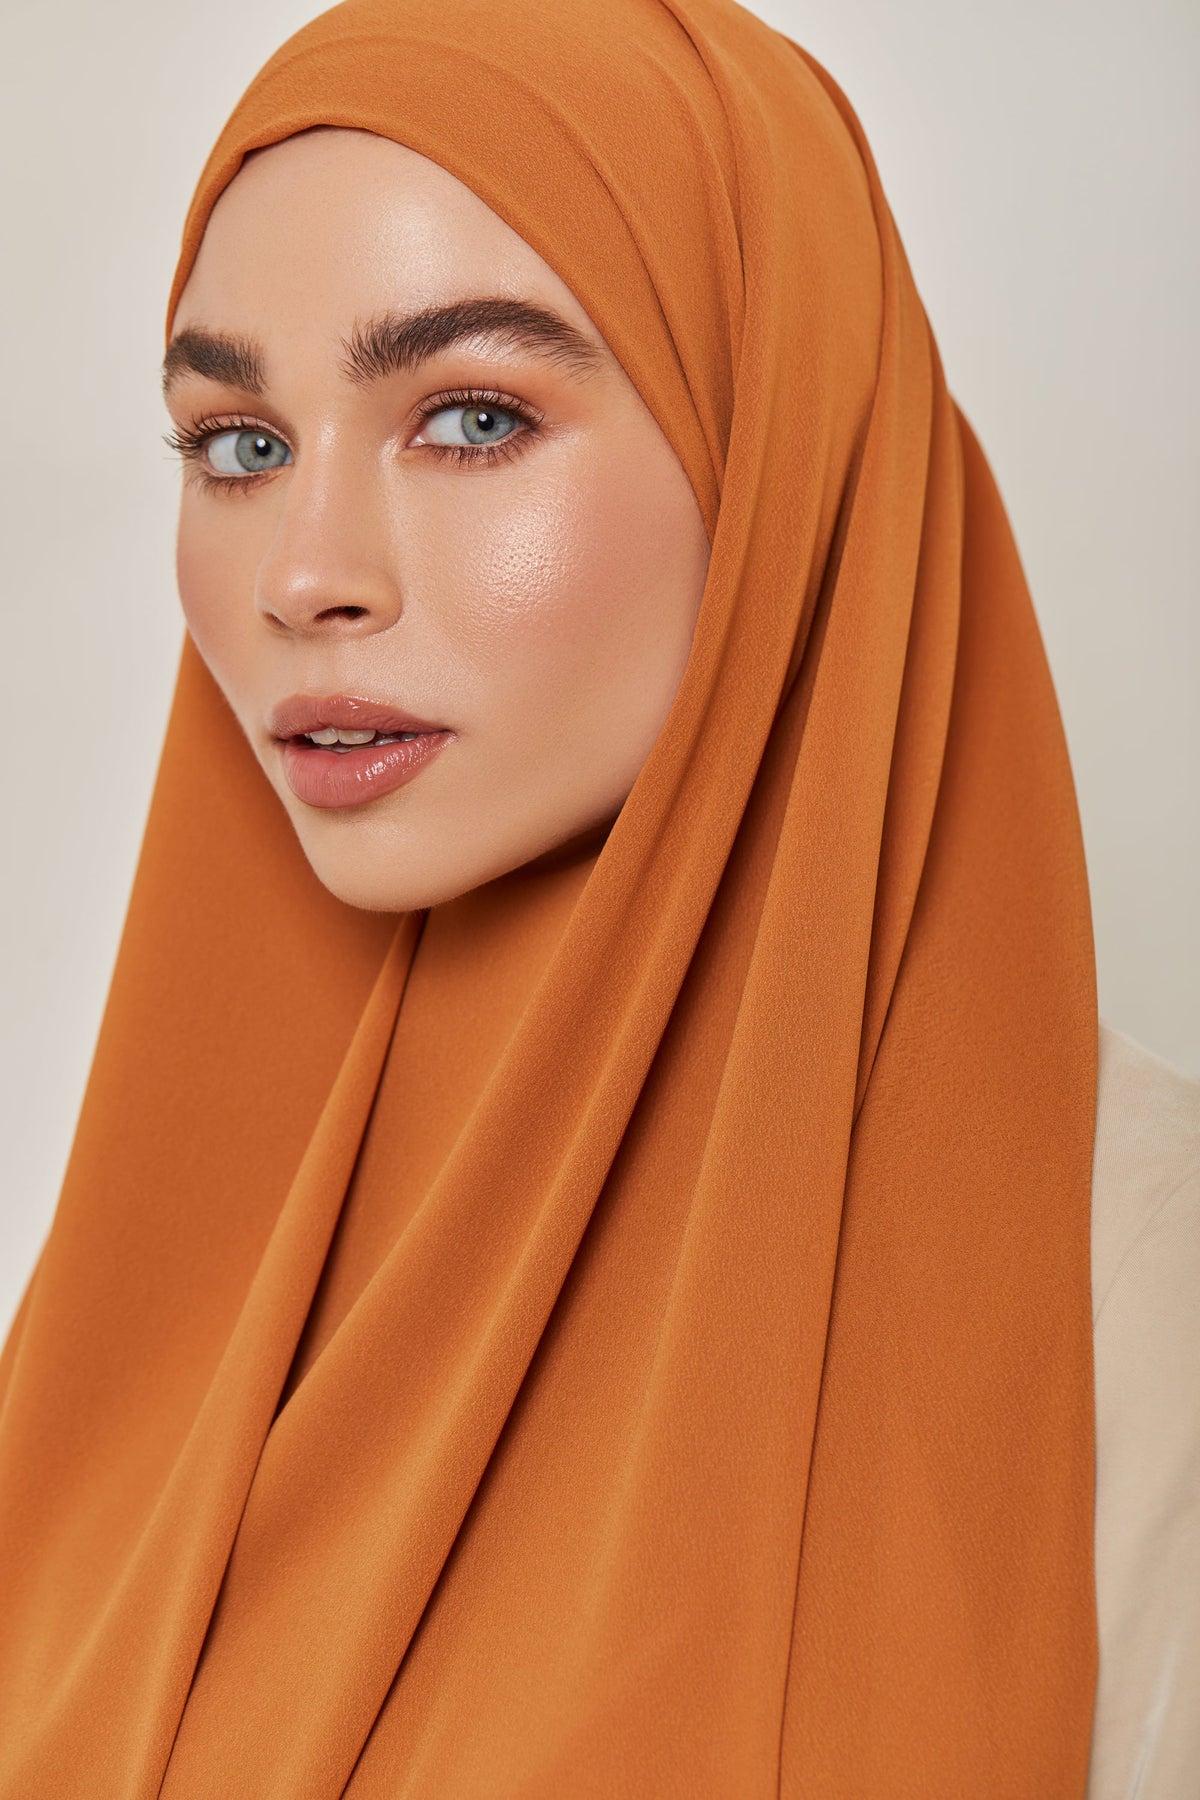 TEXTURE Everyday Chiffon Hijab - Cinnamon Stix epschoolboard 